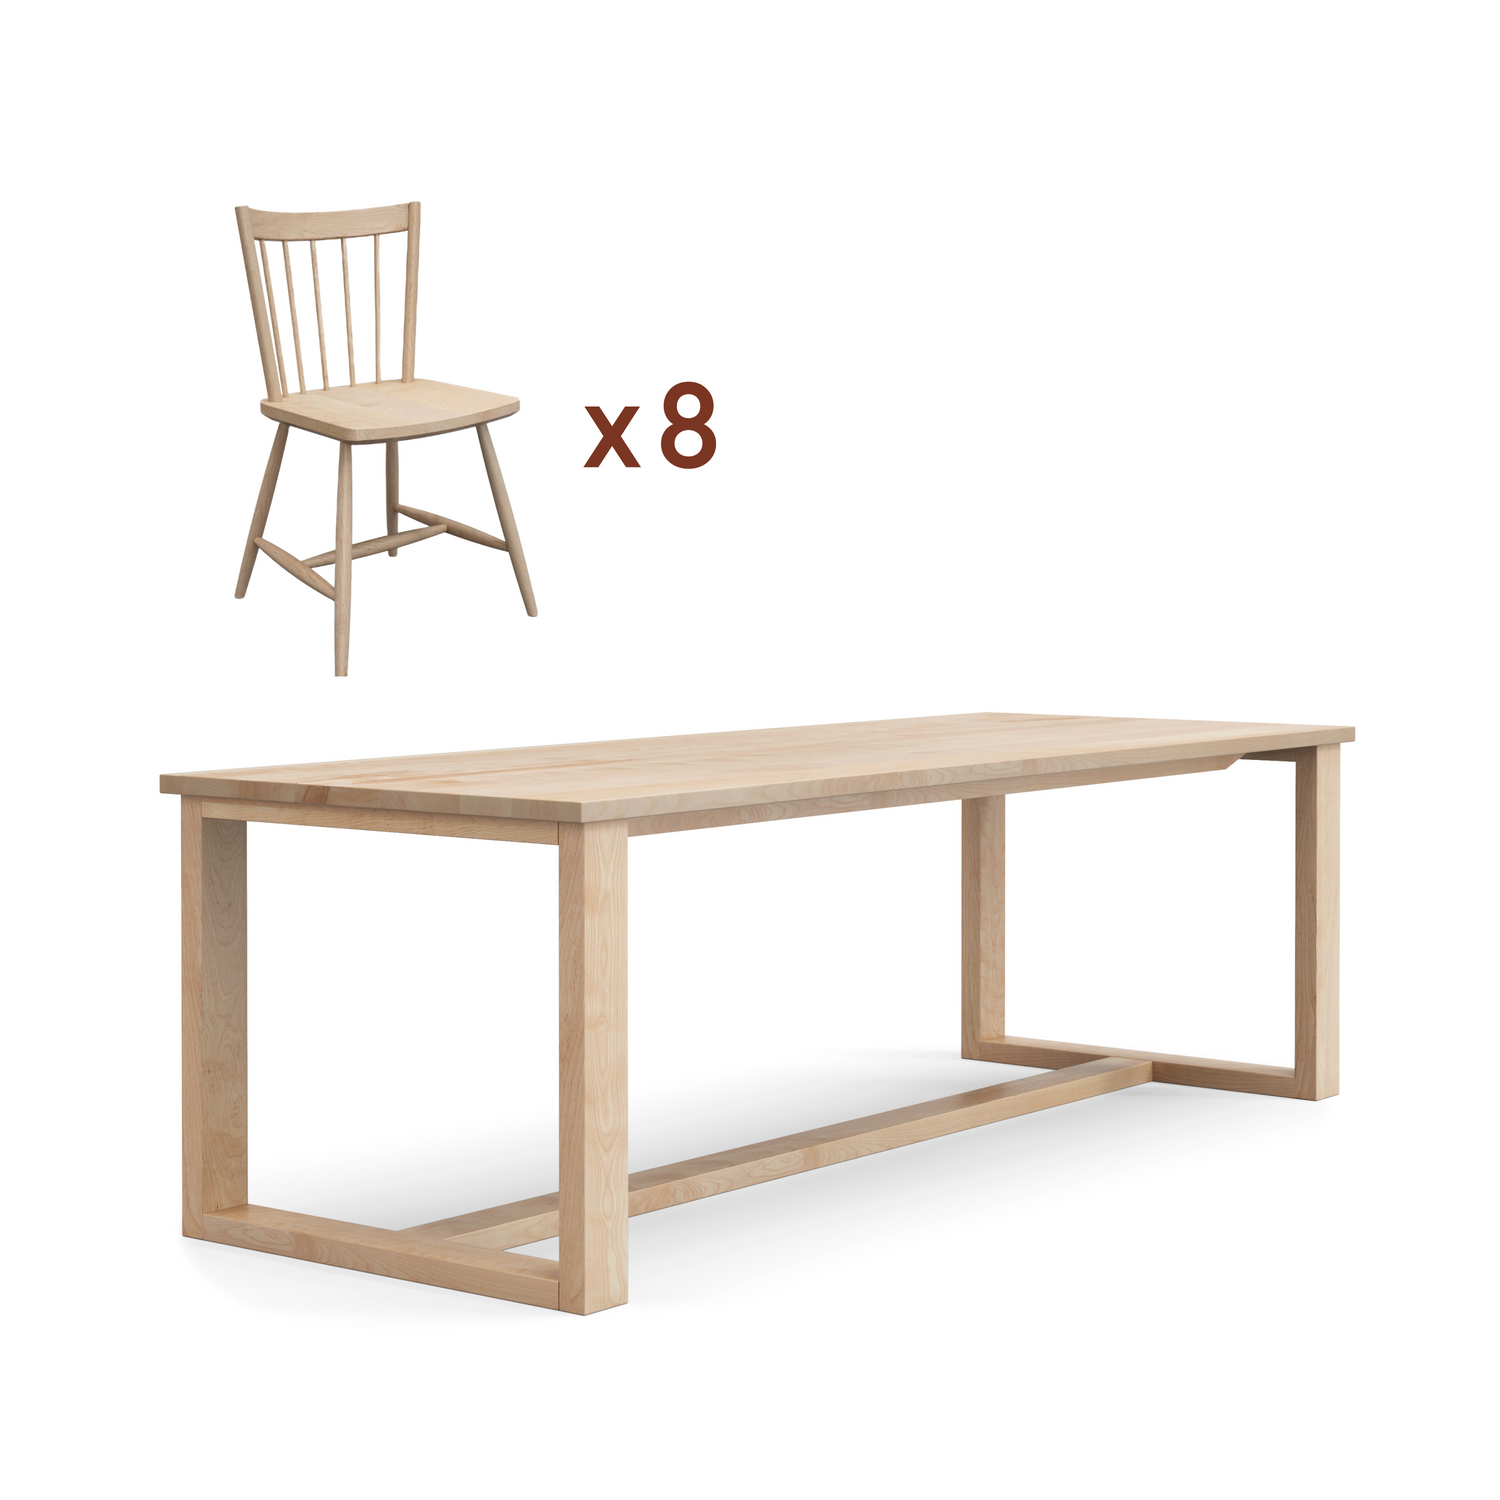 Arwin table + chairs bundle